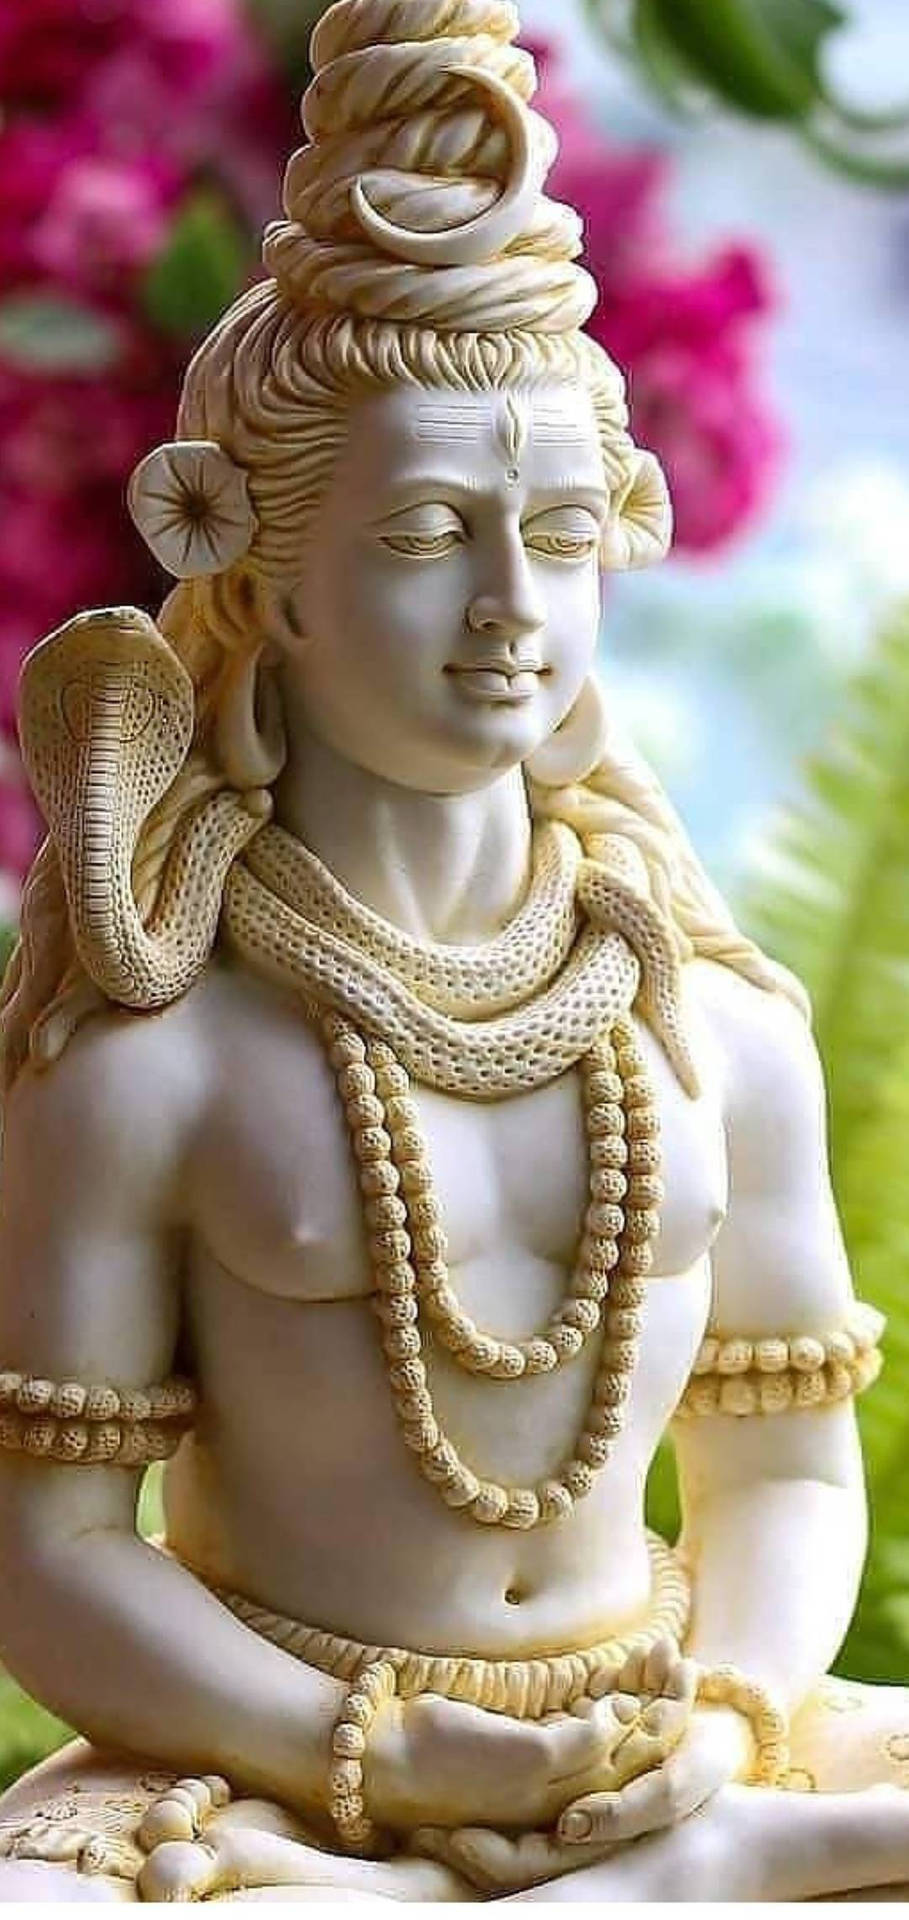 Download Lord Shiva Stone Figure Wallpaper | Wallpapers.com